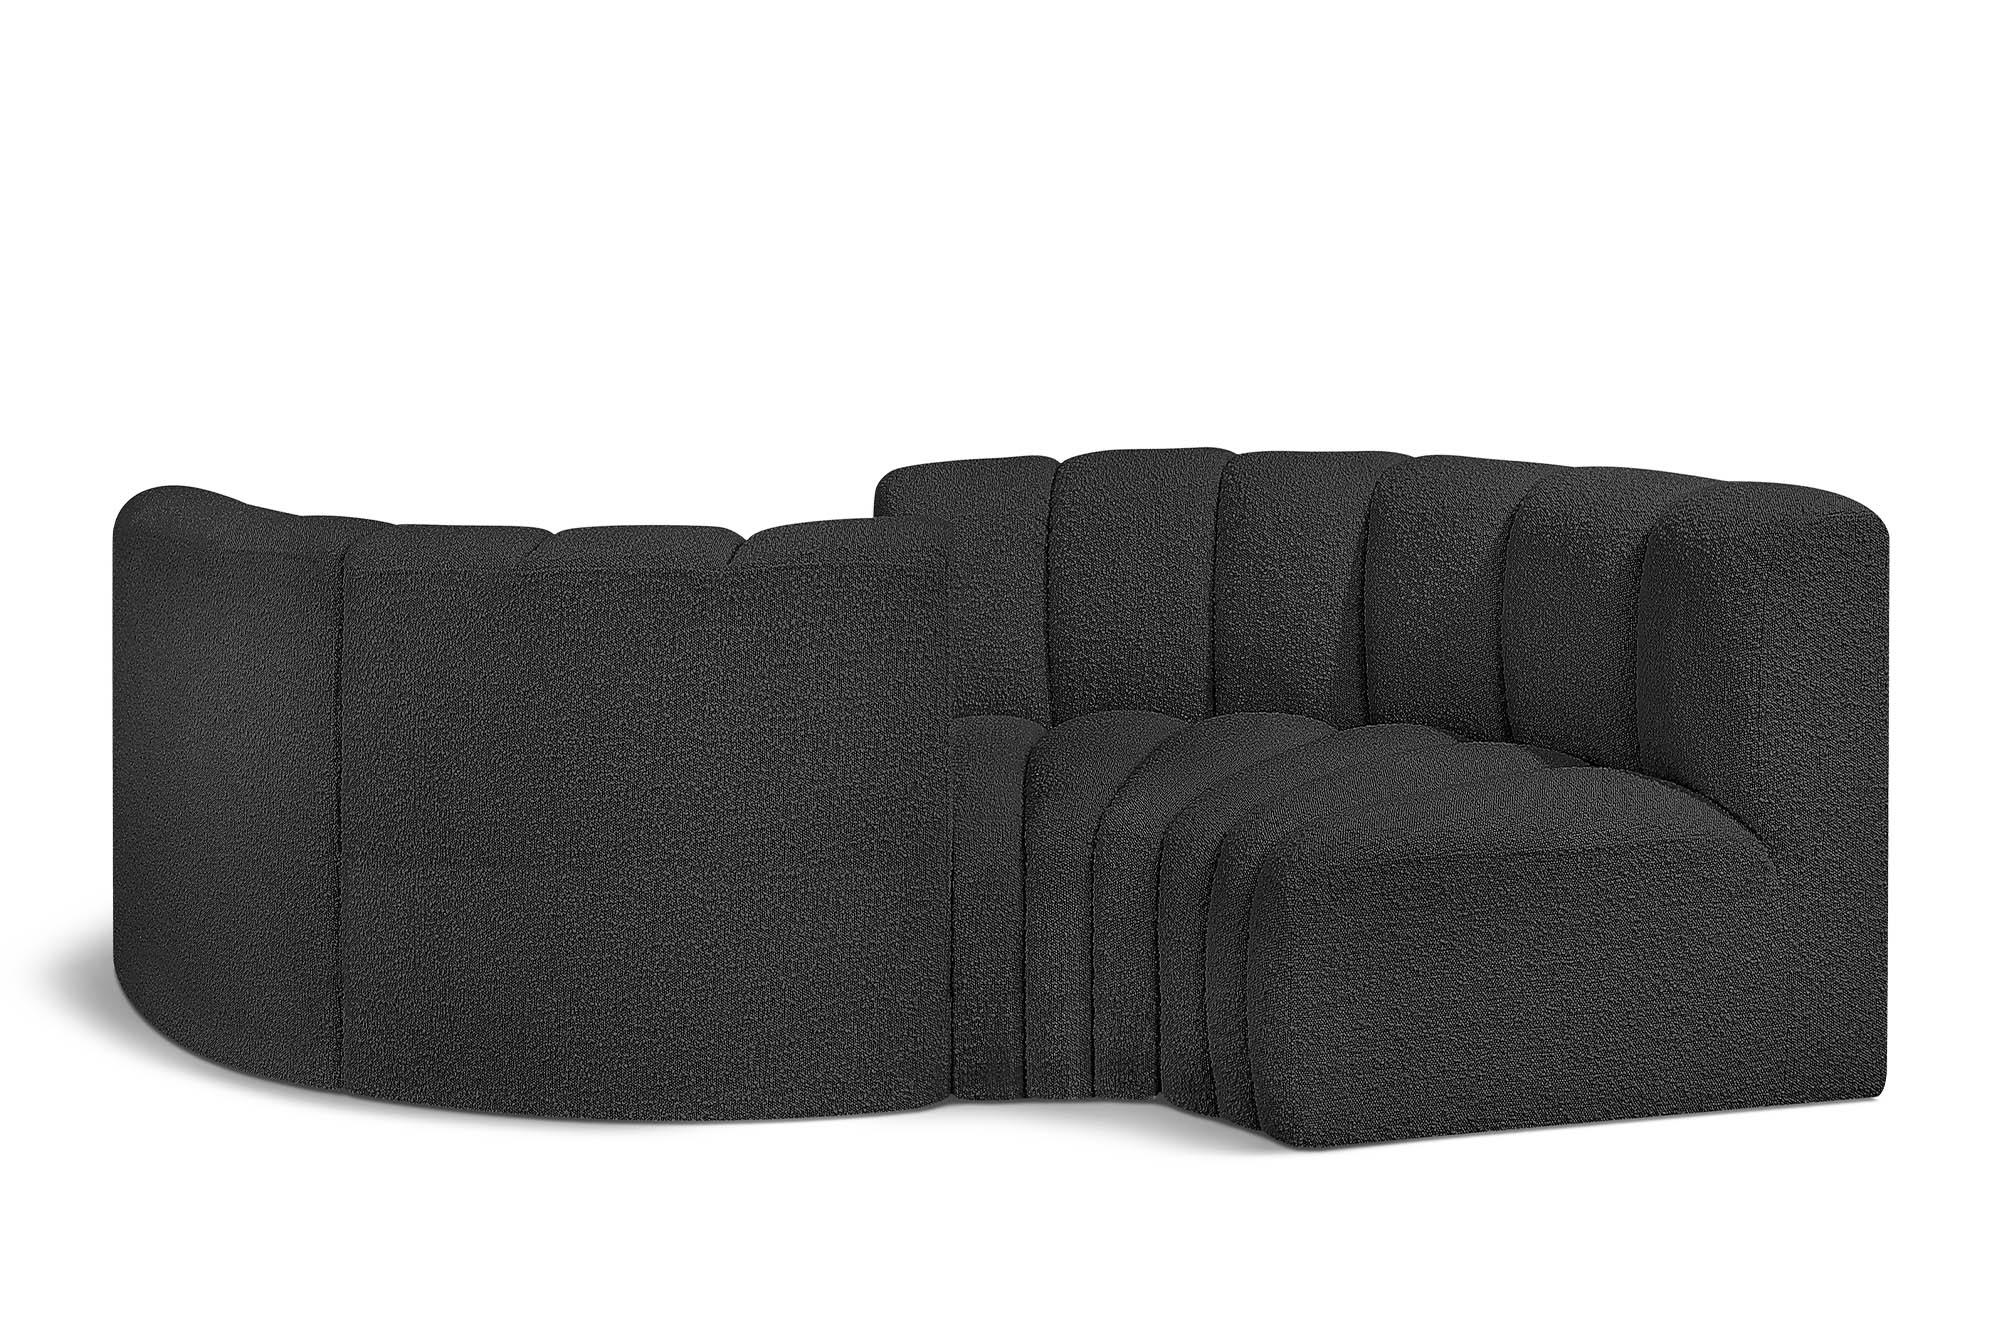 Contemporary, Modern Modular Sectional Sofa ARC 102Black-S4F 102Black-S4F in Black 